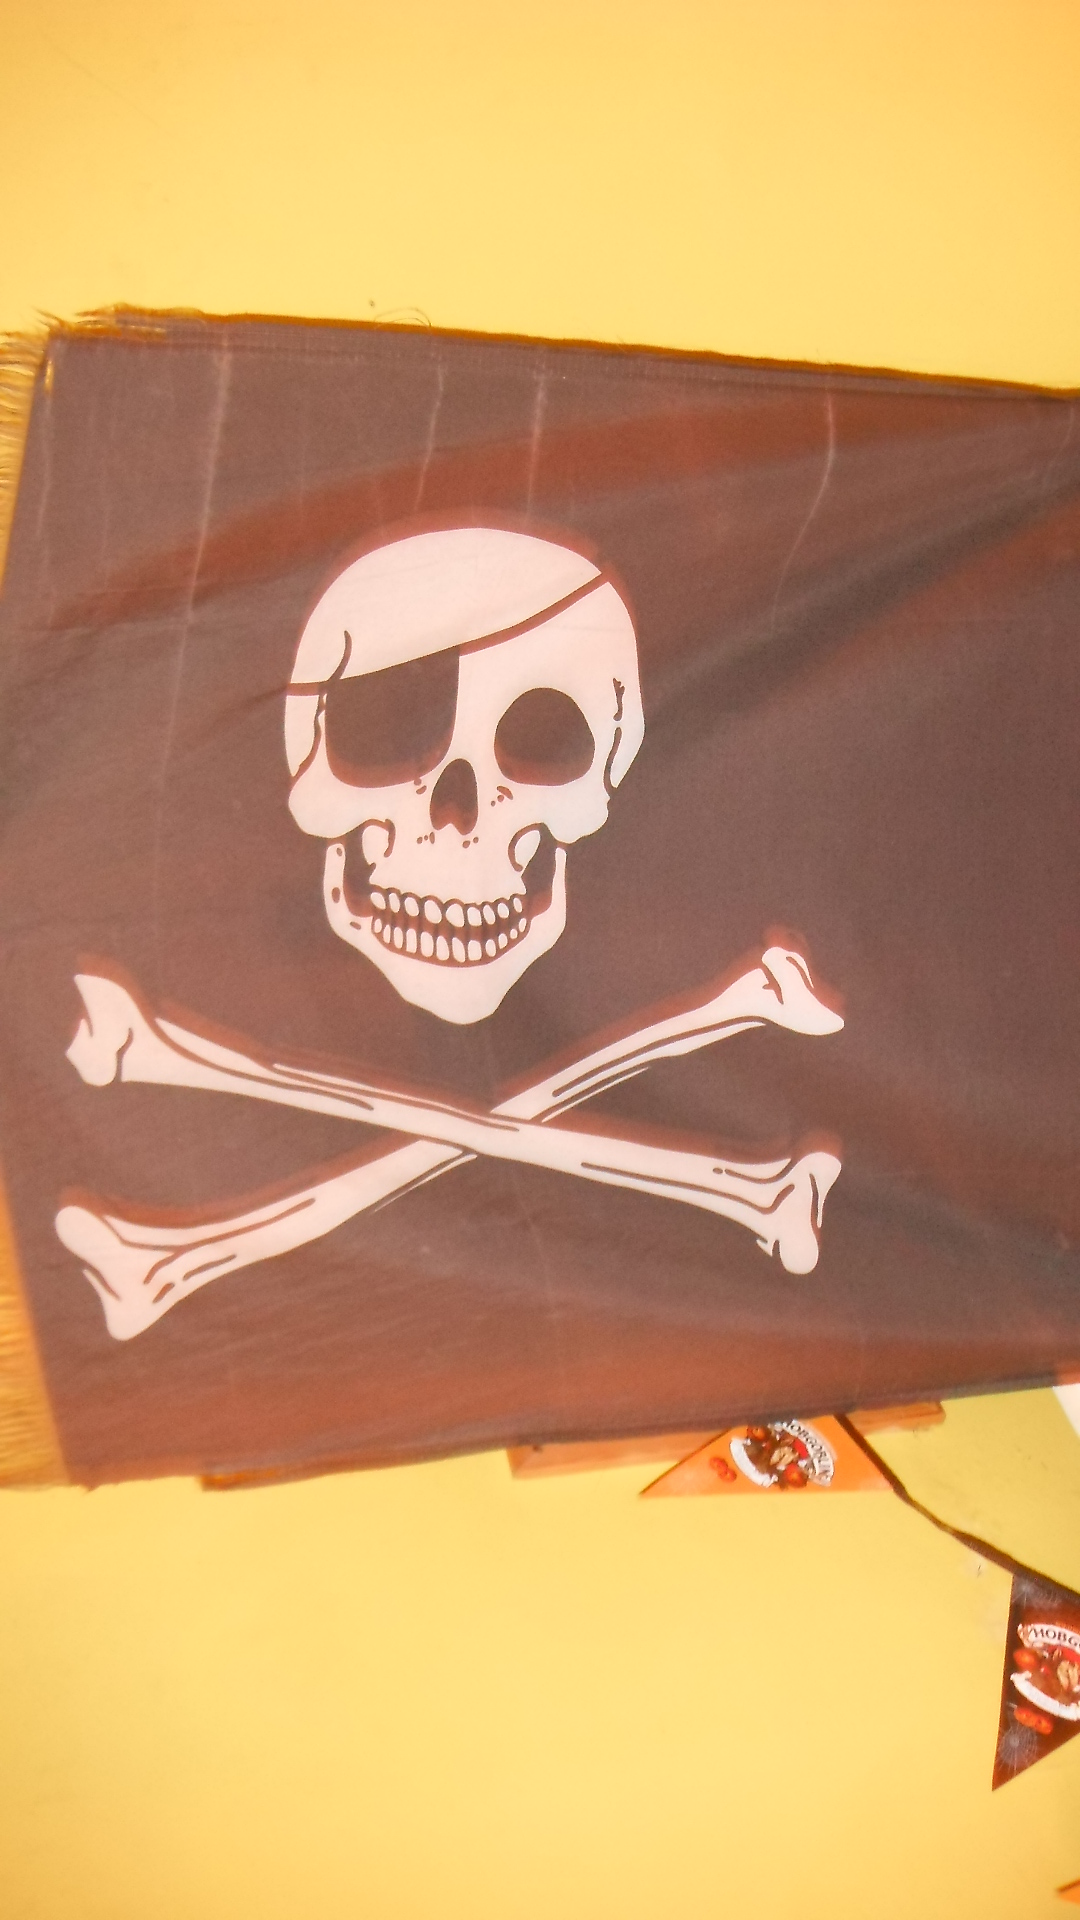 Photo taken by me – pirate flag in Wangies pub, Patricroft, Salford